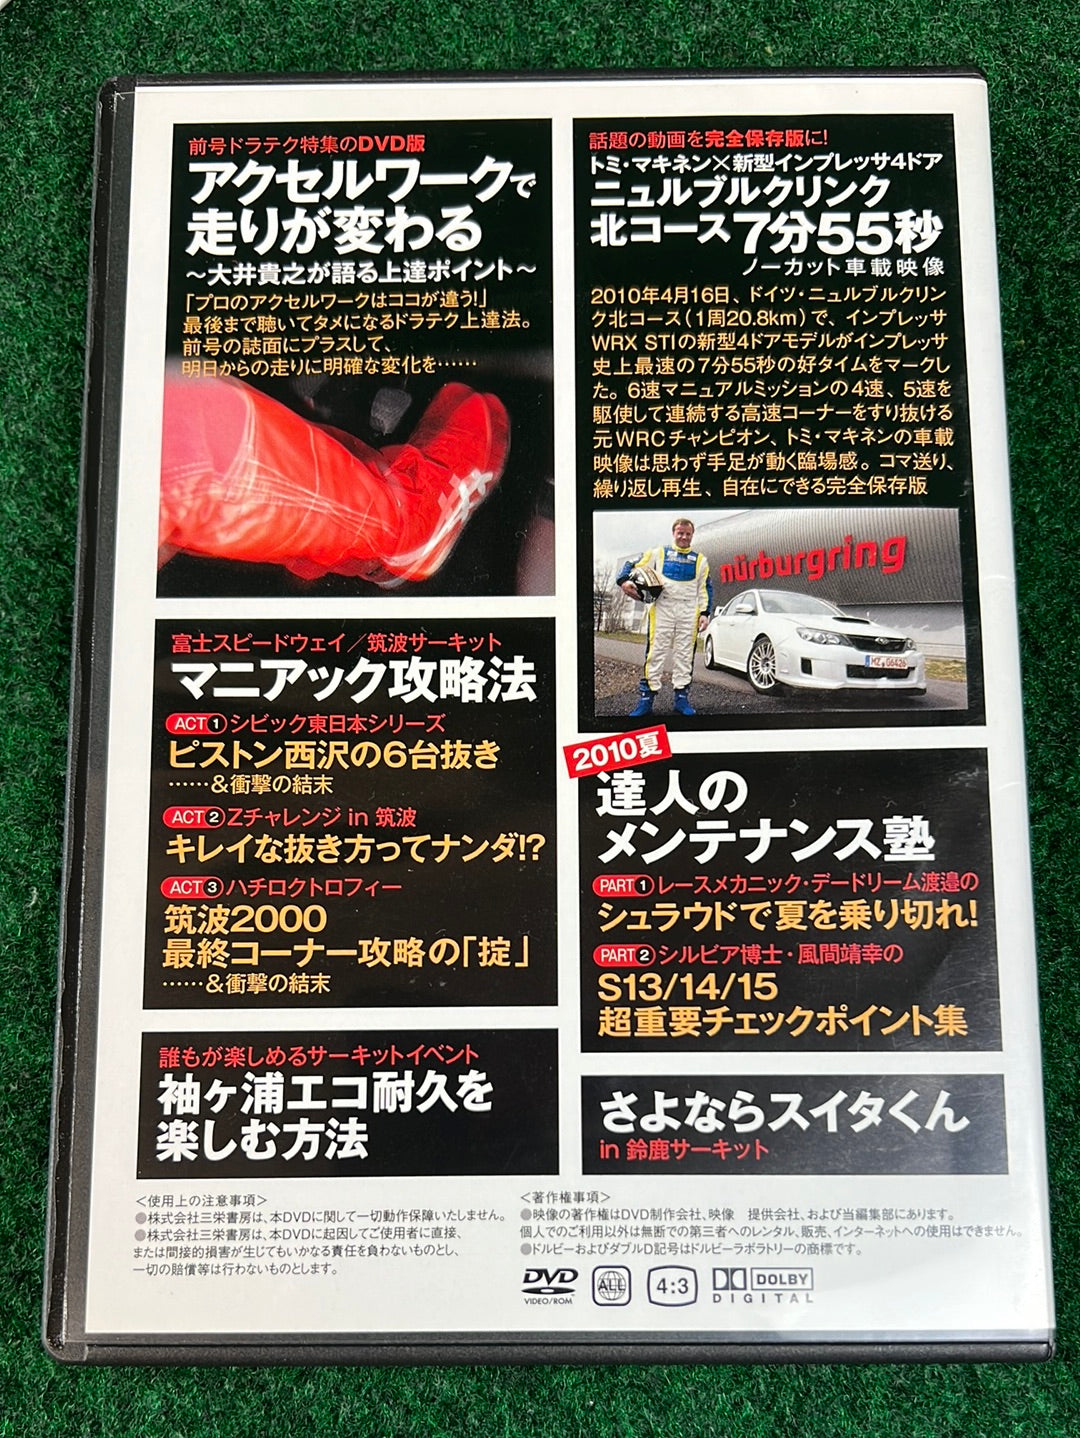 REVSPEED Magazine & DVD - Vol. 237 September 2010